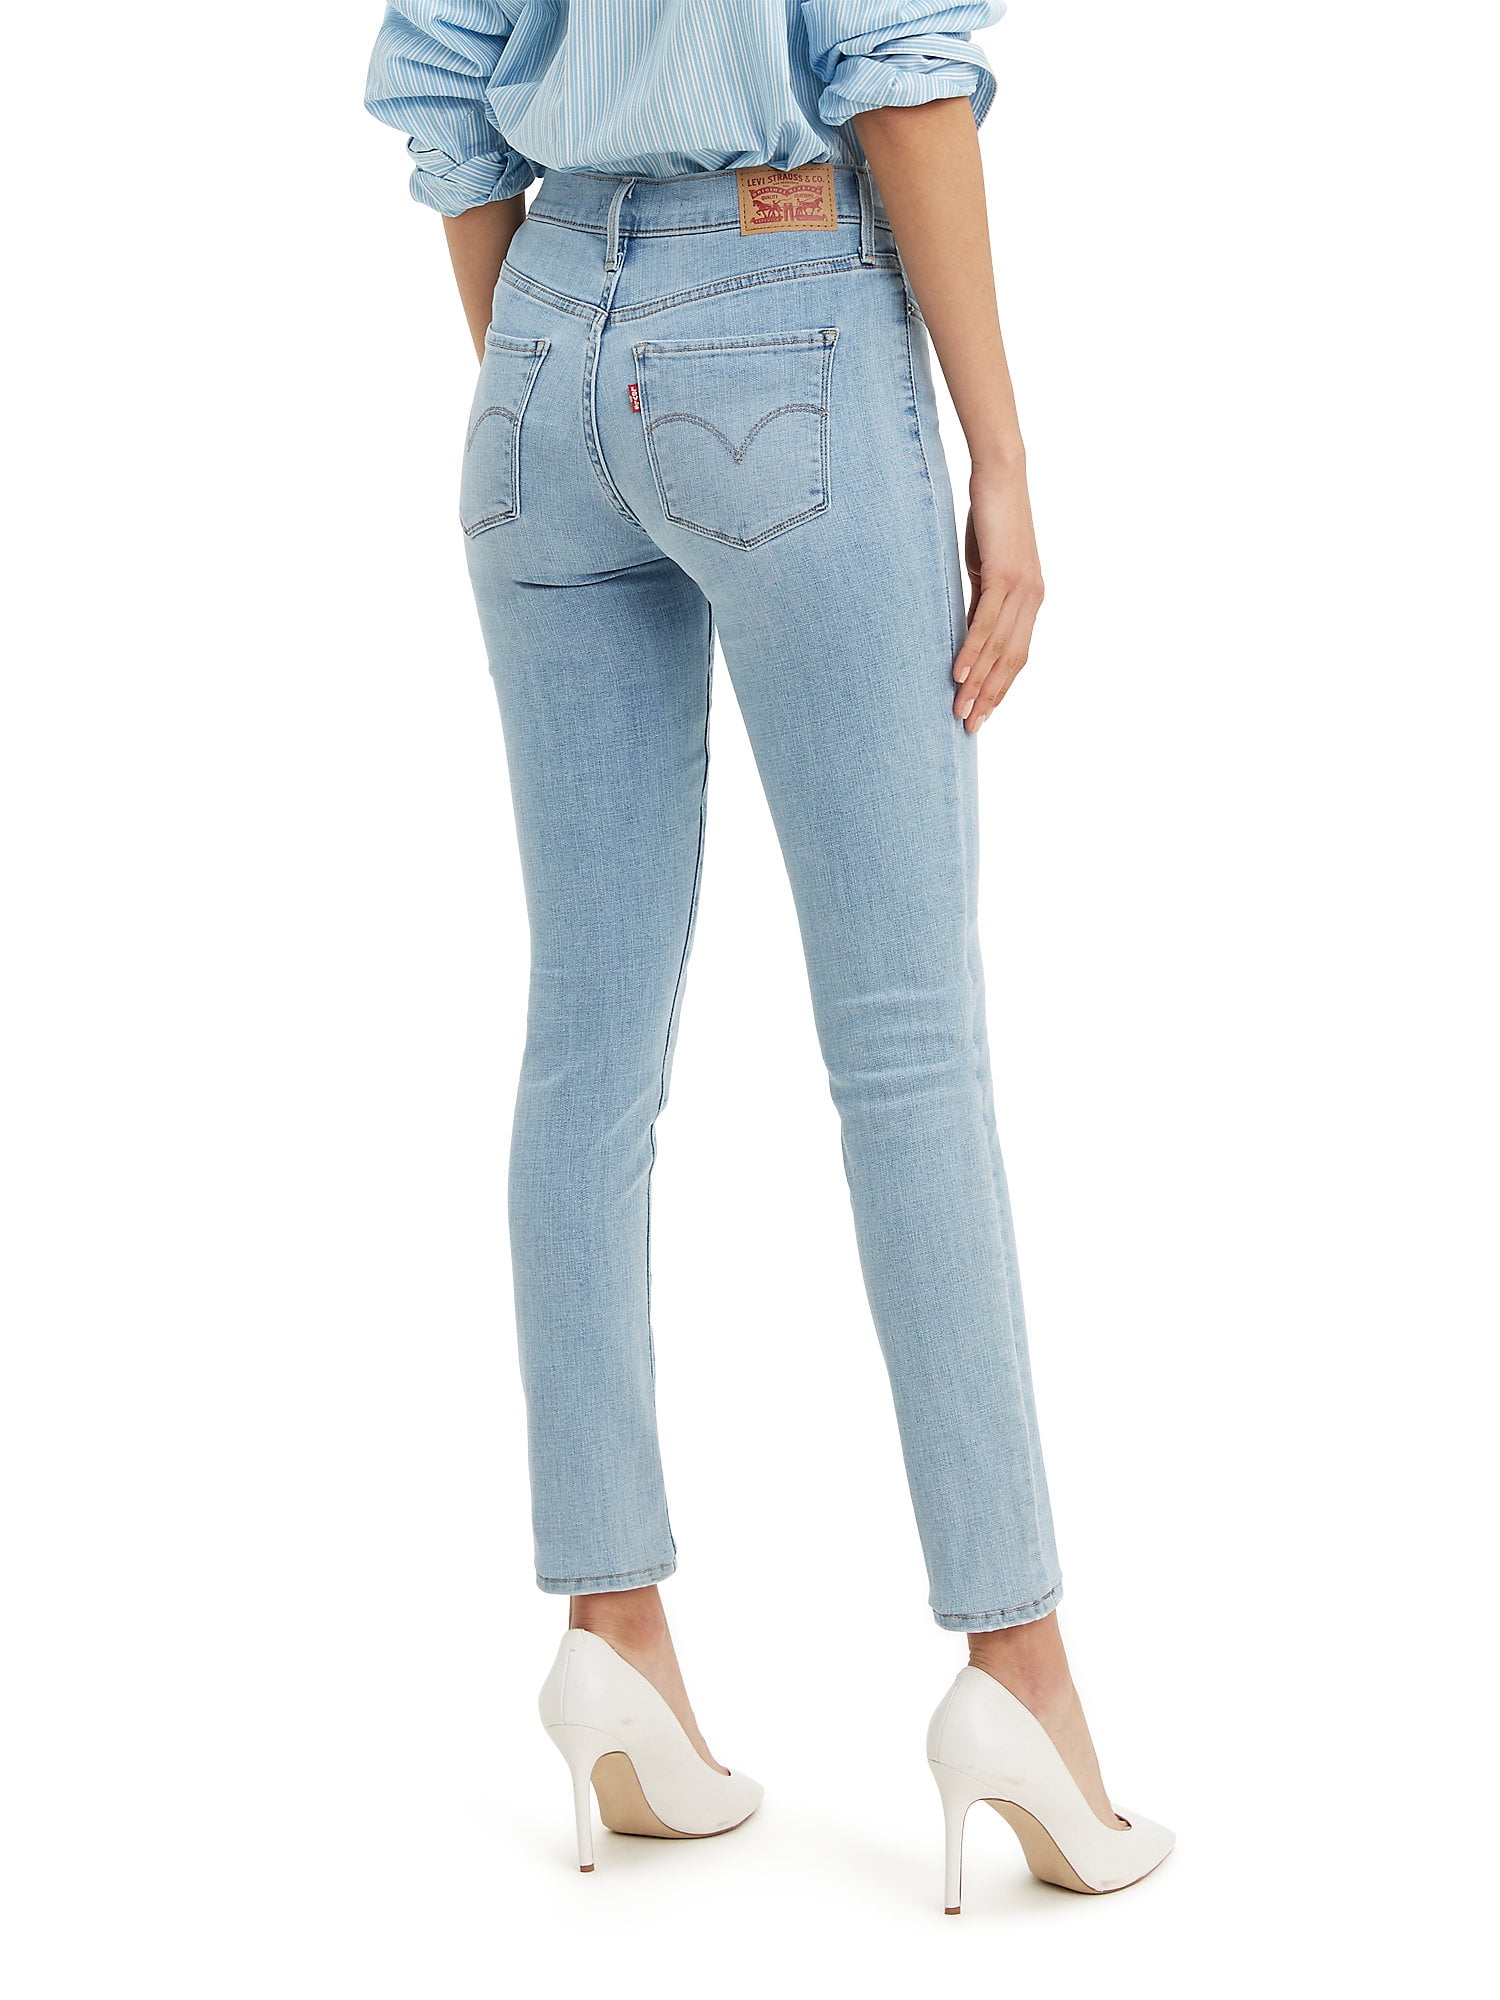 Levi's Original Red Tab Women's 311 Shaping Skinny Jeans - Walmart.com